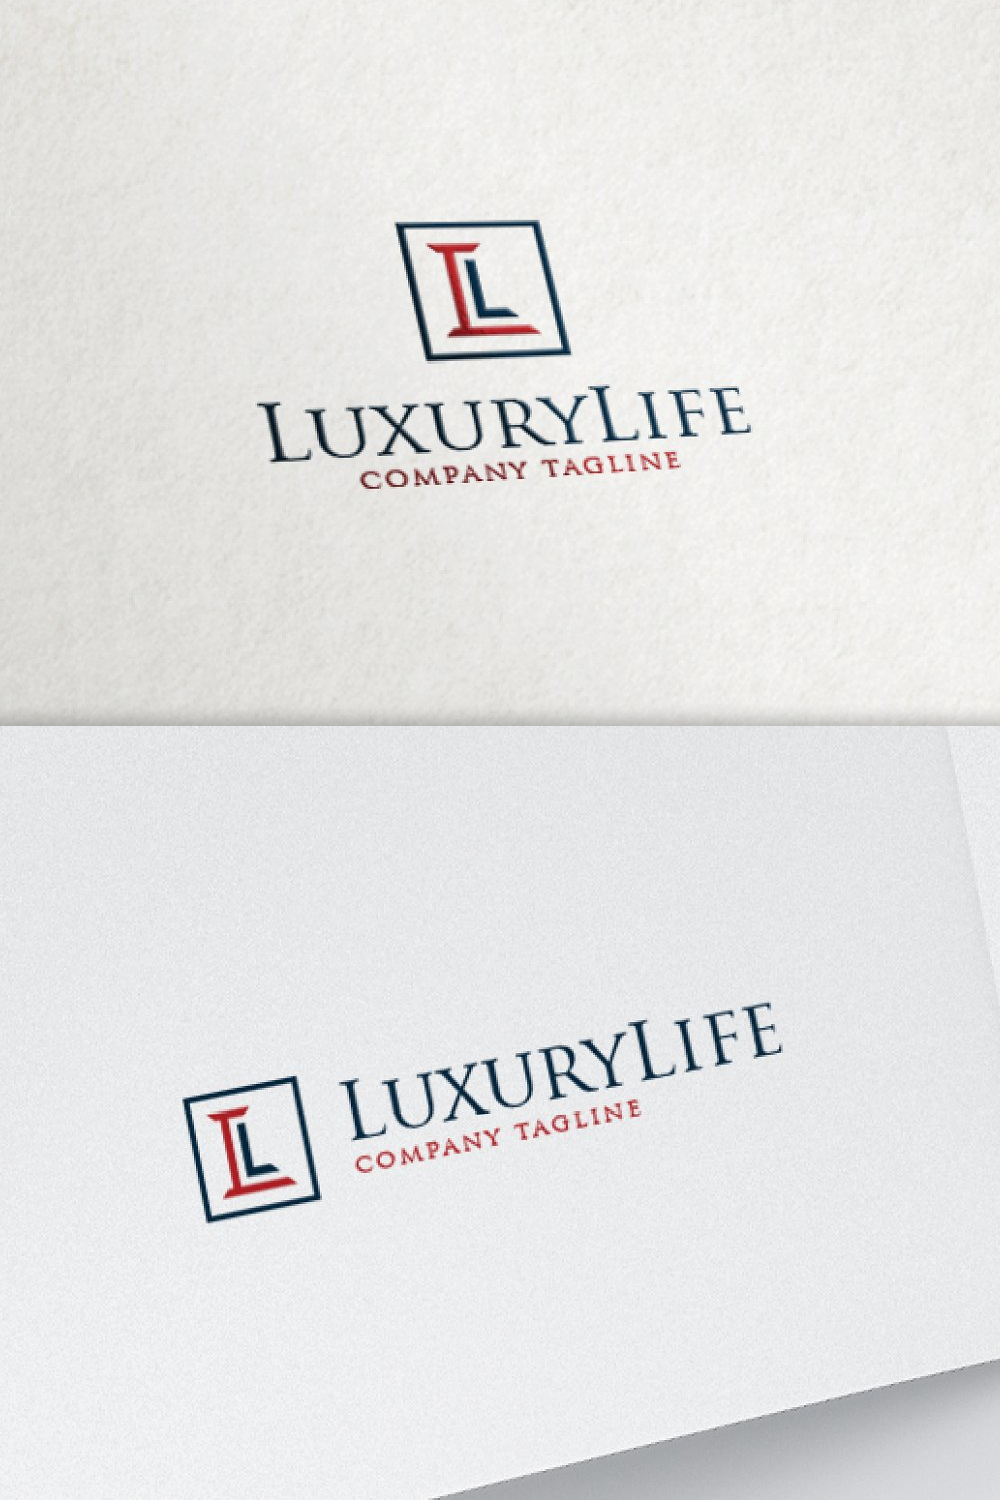 3 l logo luxury life